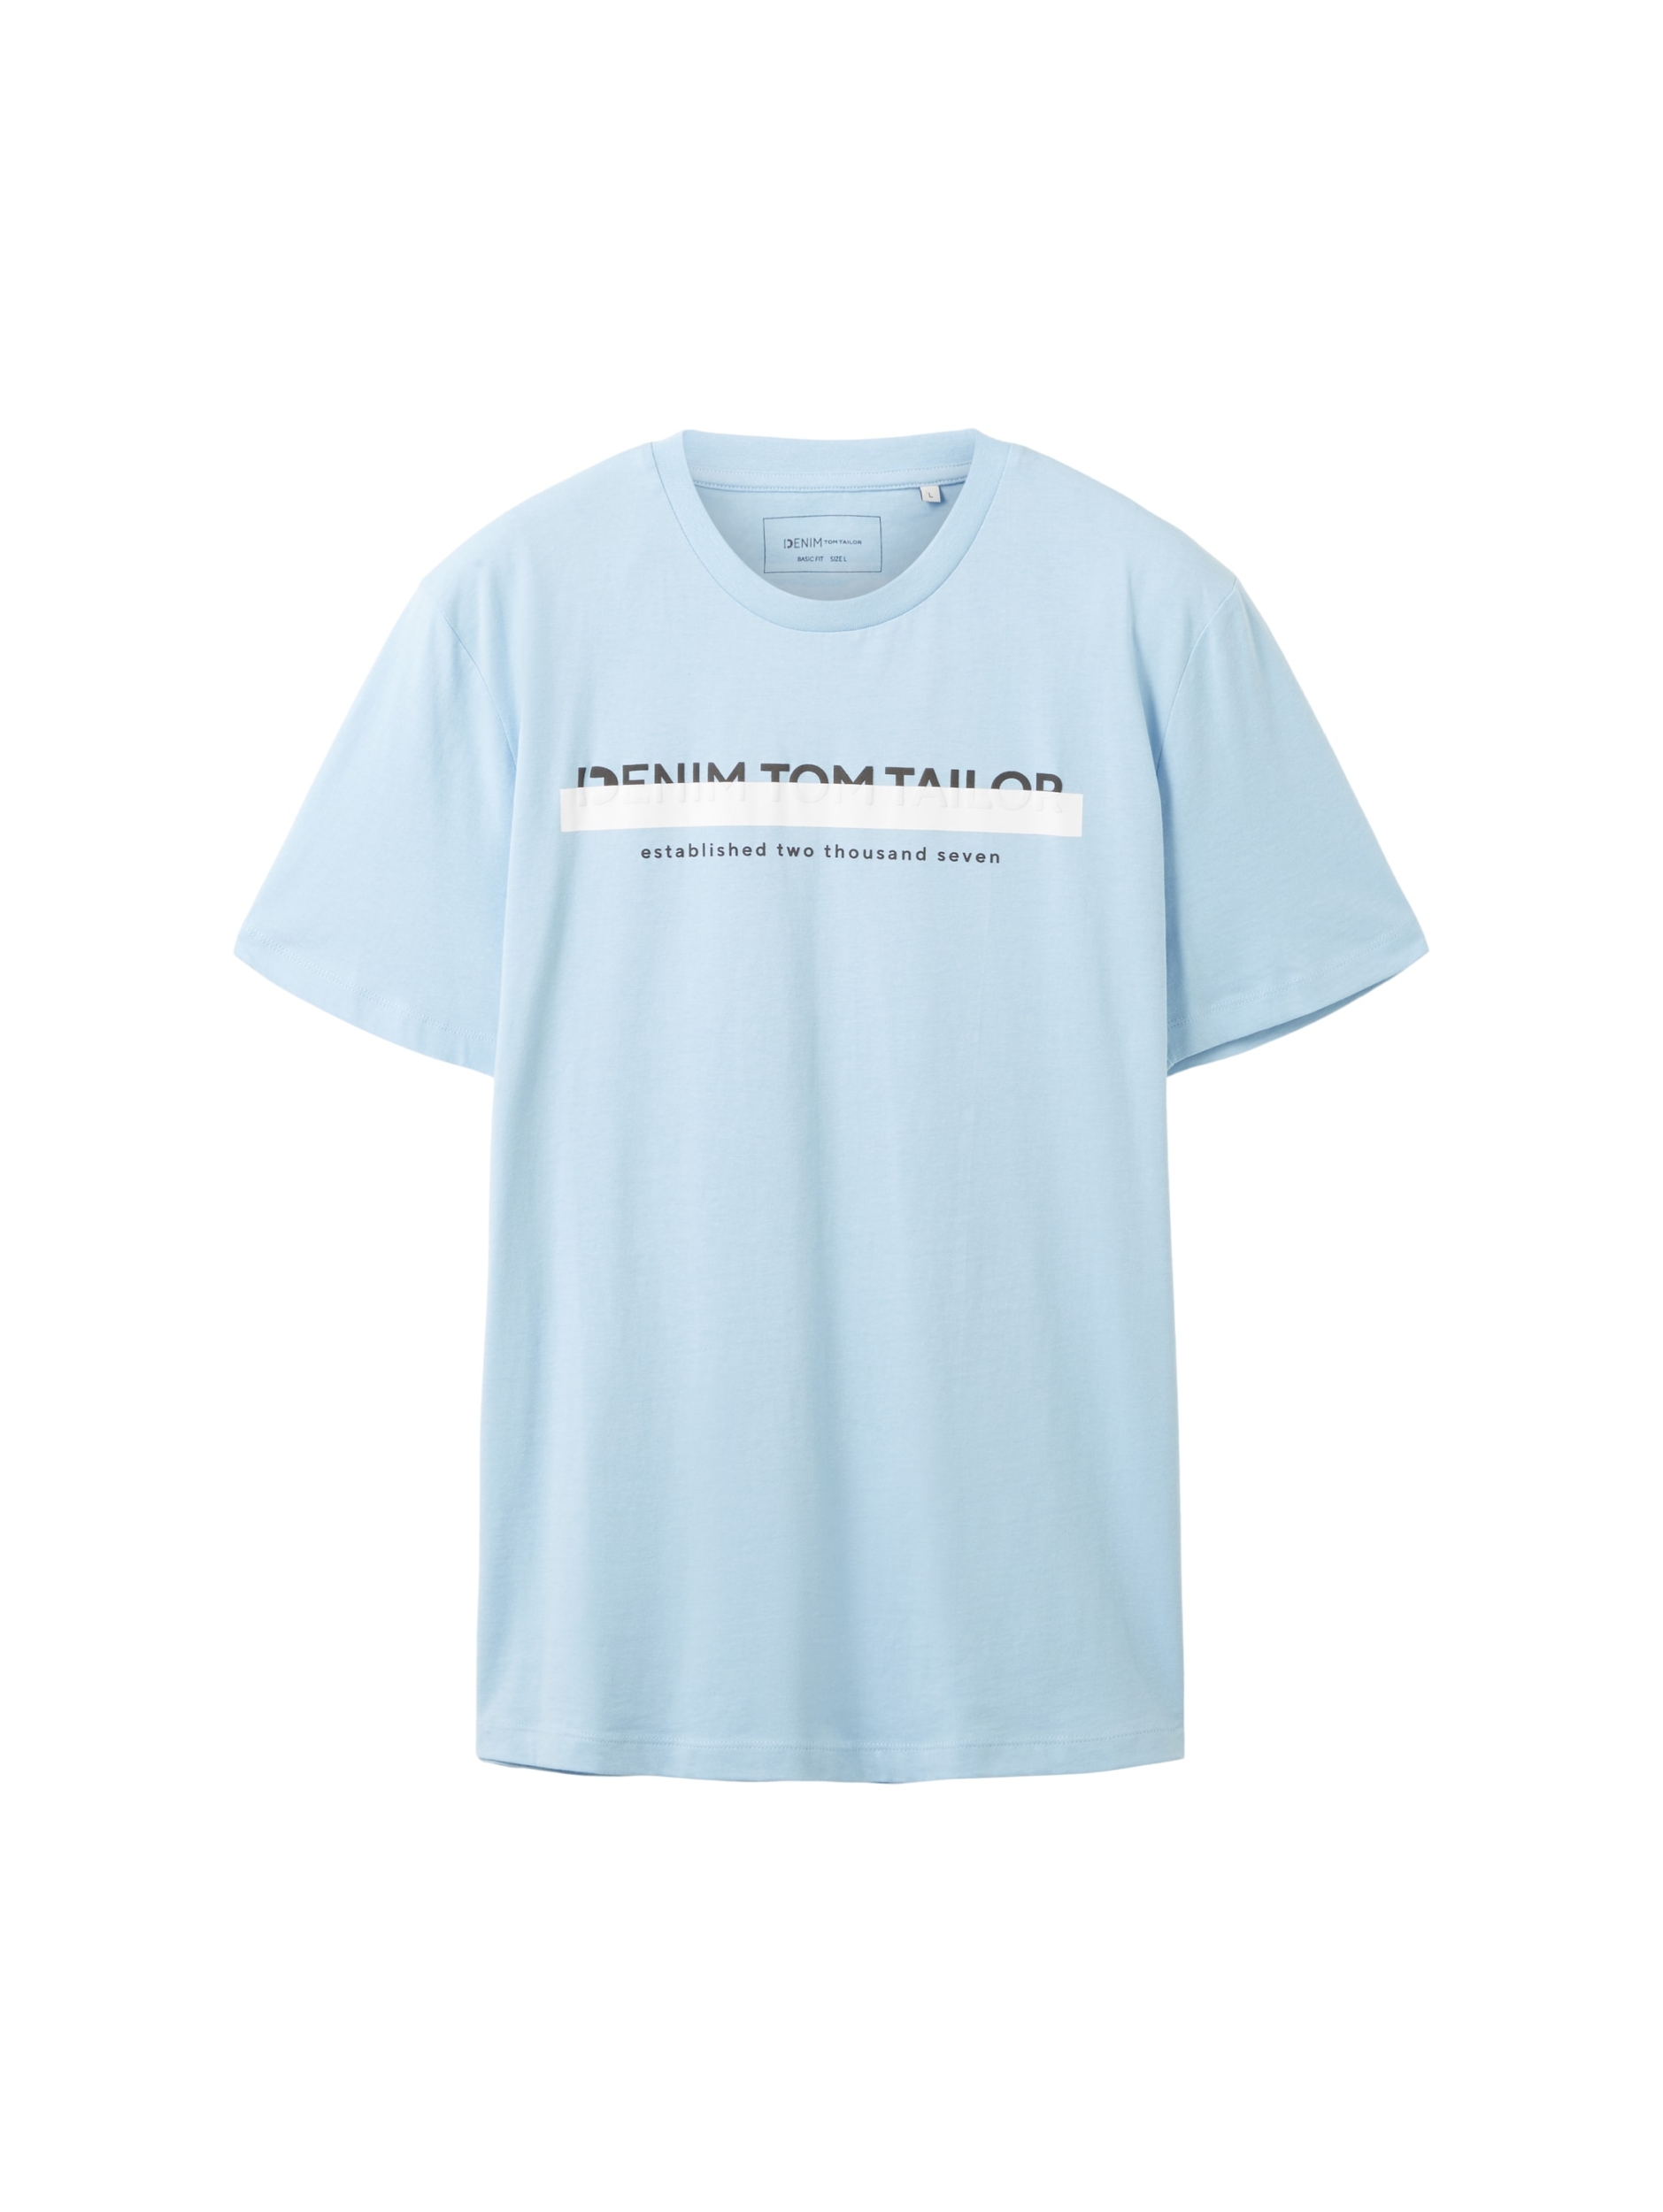 TOM TAILOR t-shirt kaufen printed online